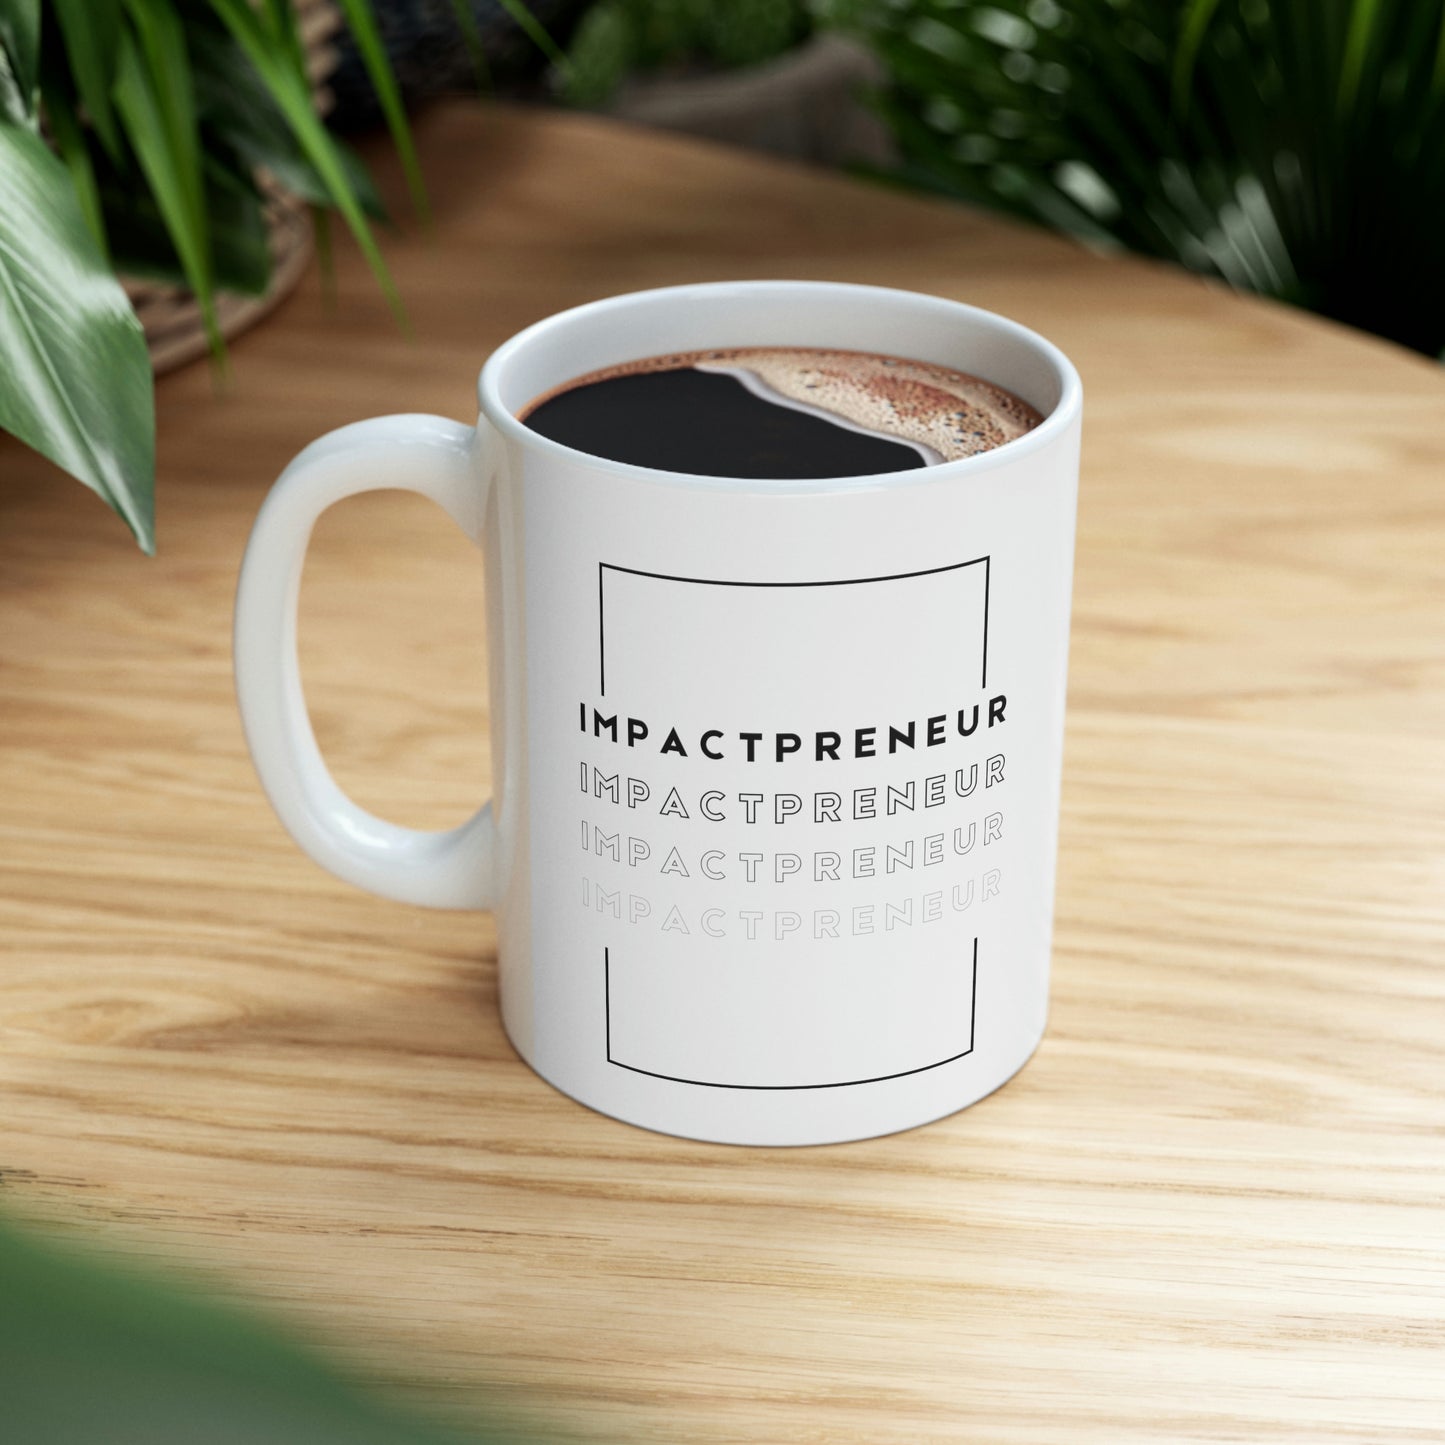 "Impactpreneur" Ceramic Mug 11oz